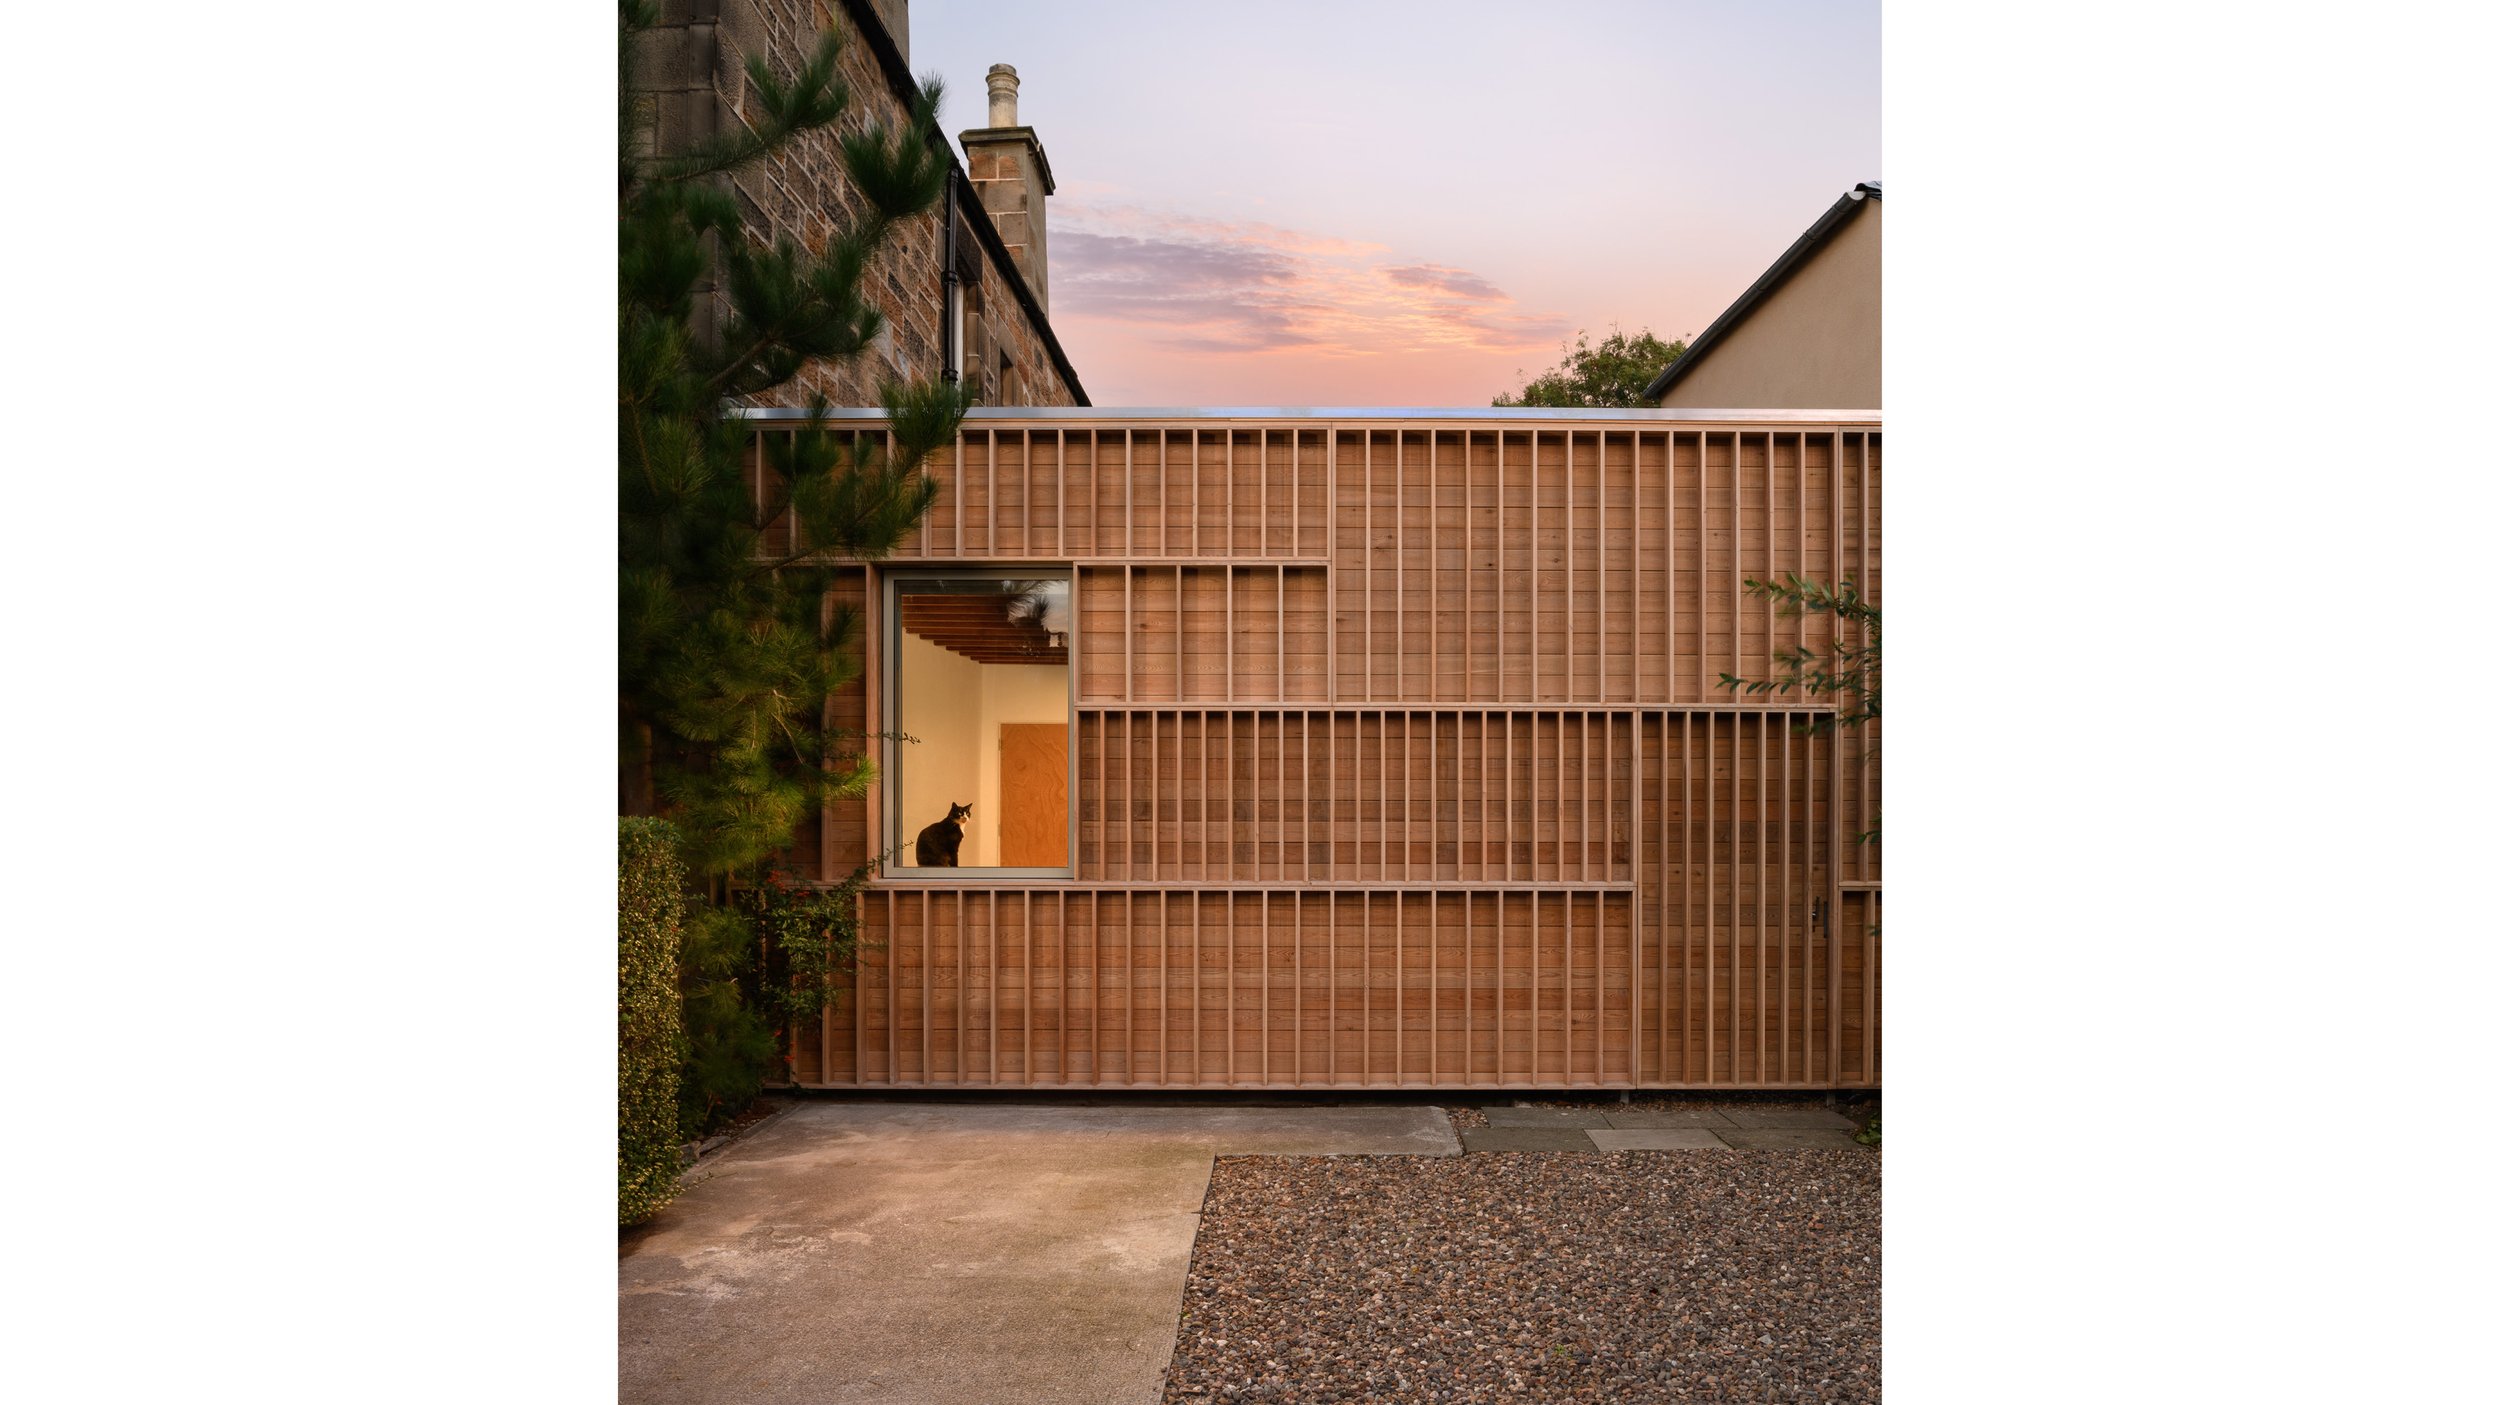 eaa-edinburgh-architectural-association-scotland-uk-awards-2022-winners-small-project-7.jpg